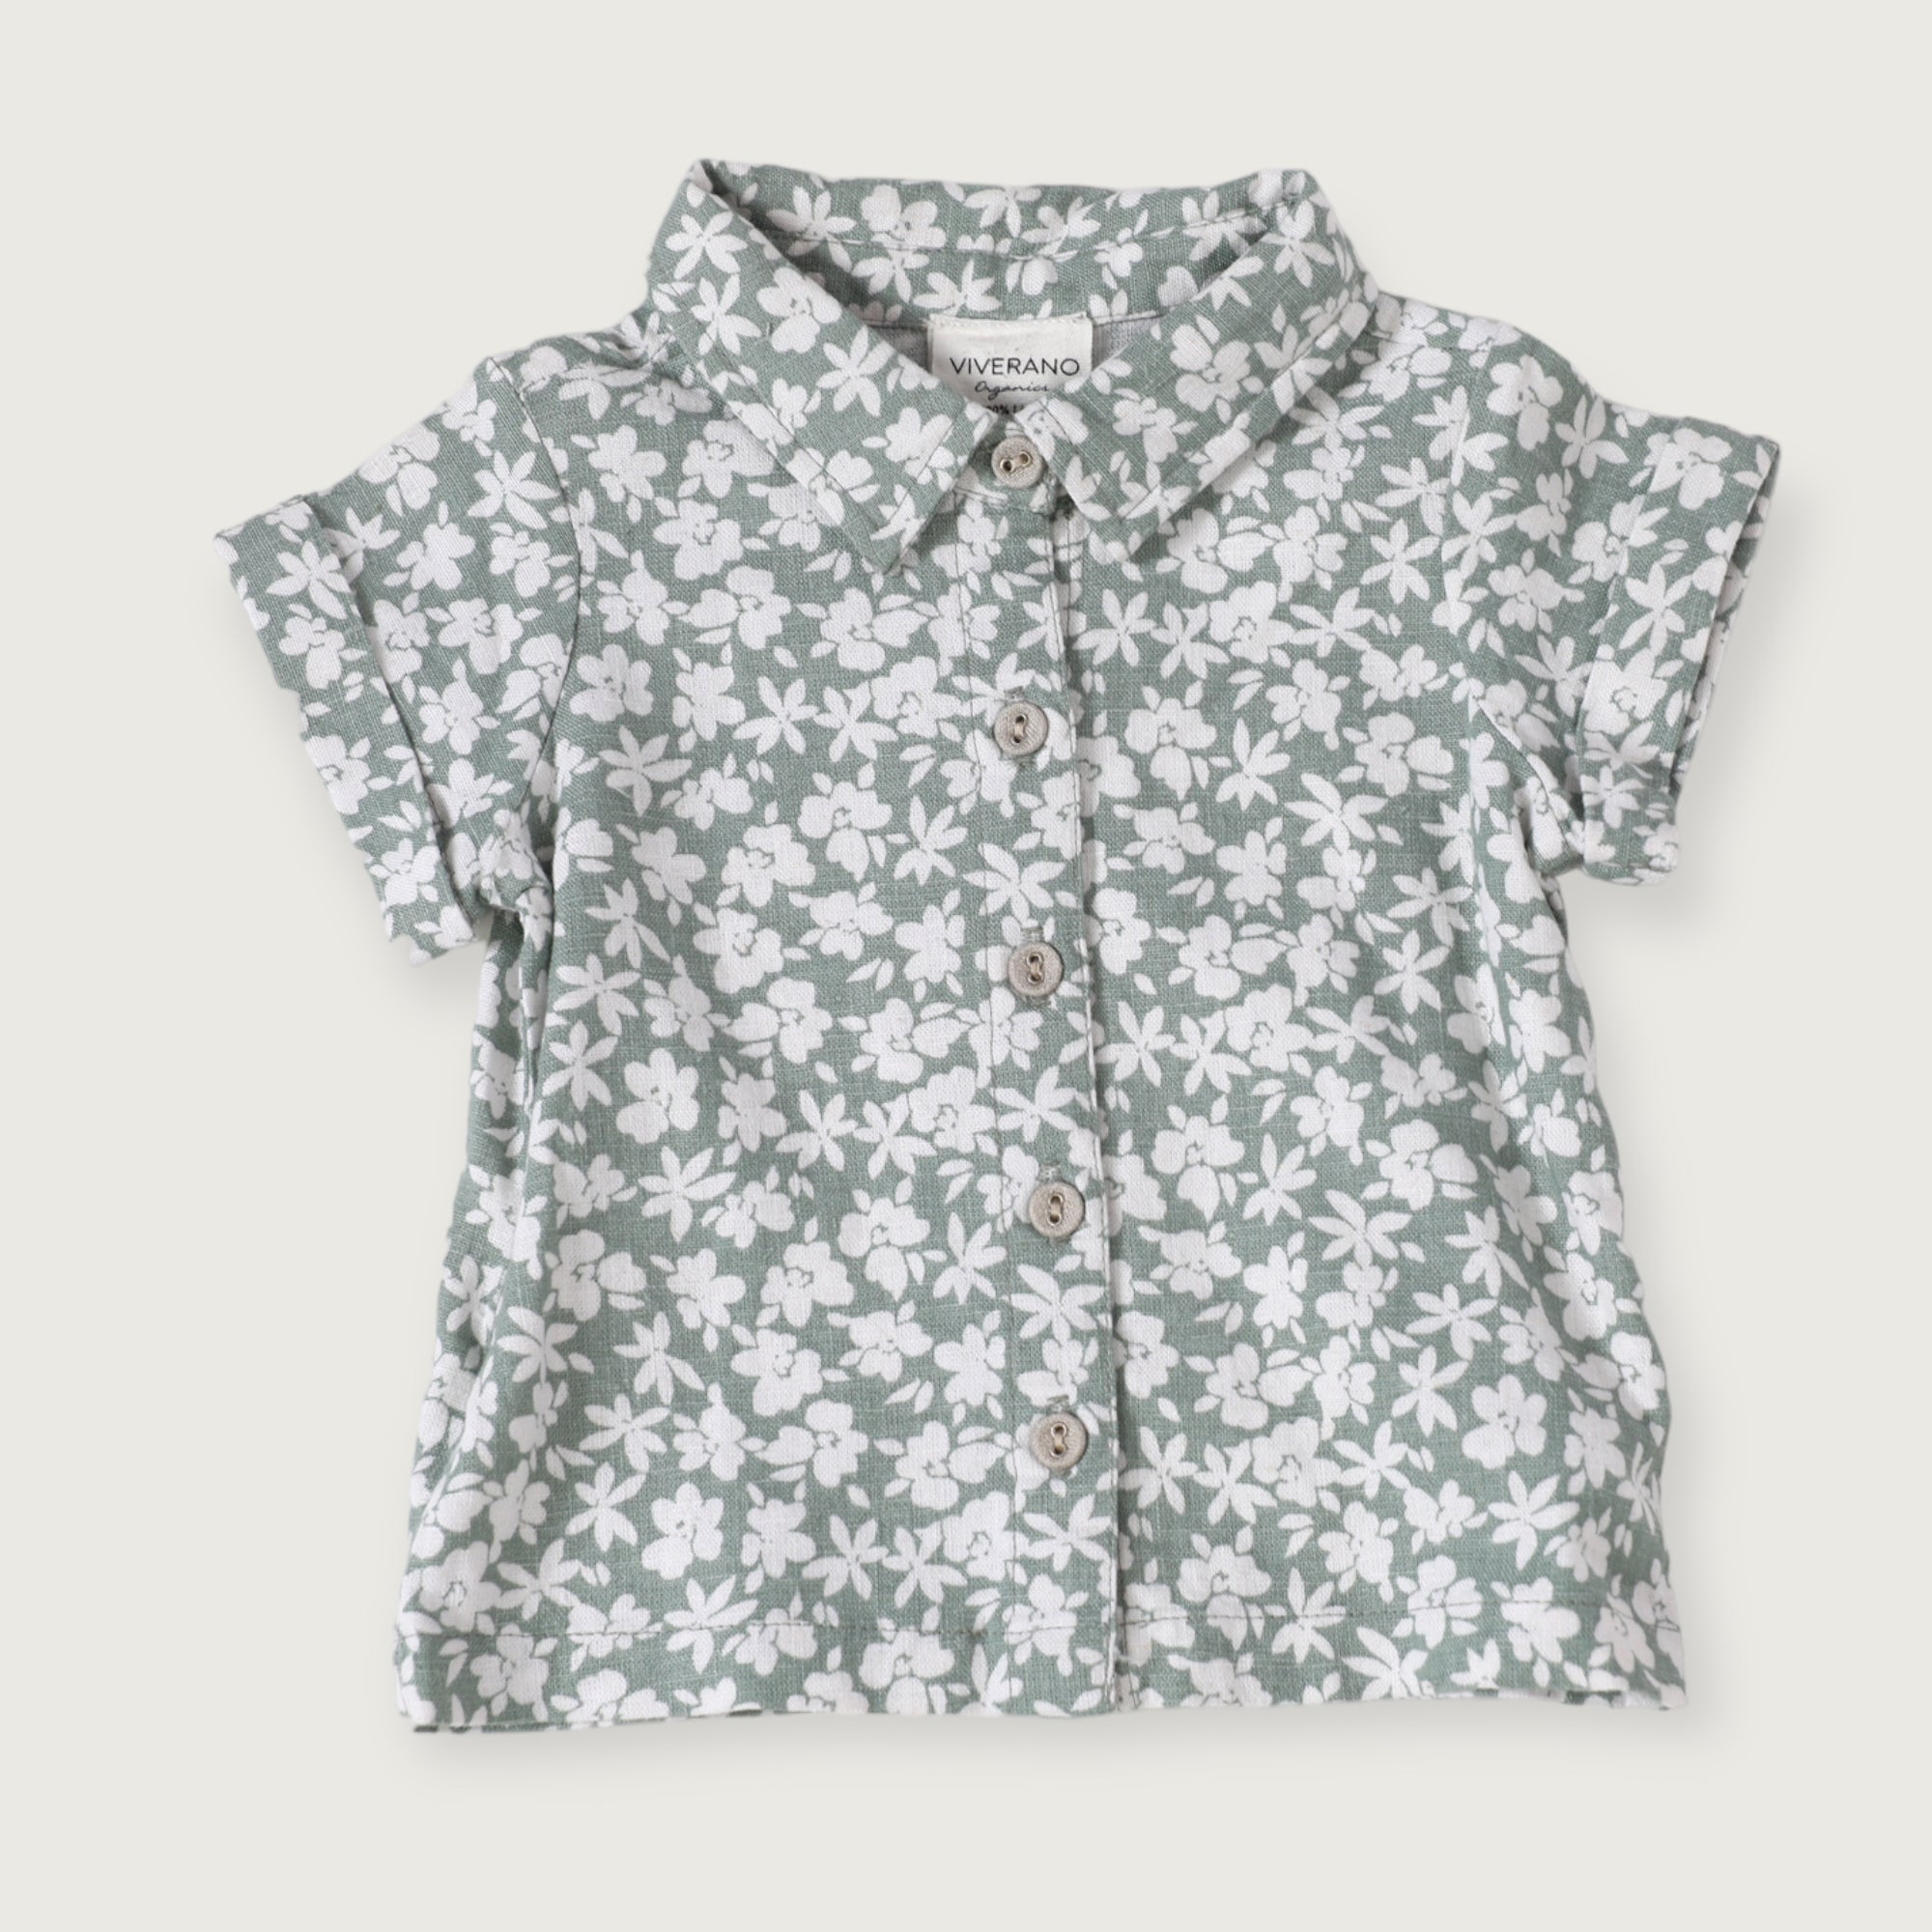 Gabriel Baby Floral Linen Shirt & Shorts 2 pc Set (Natural Linen)